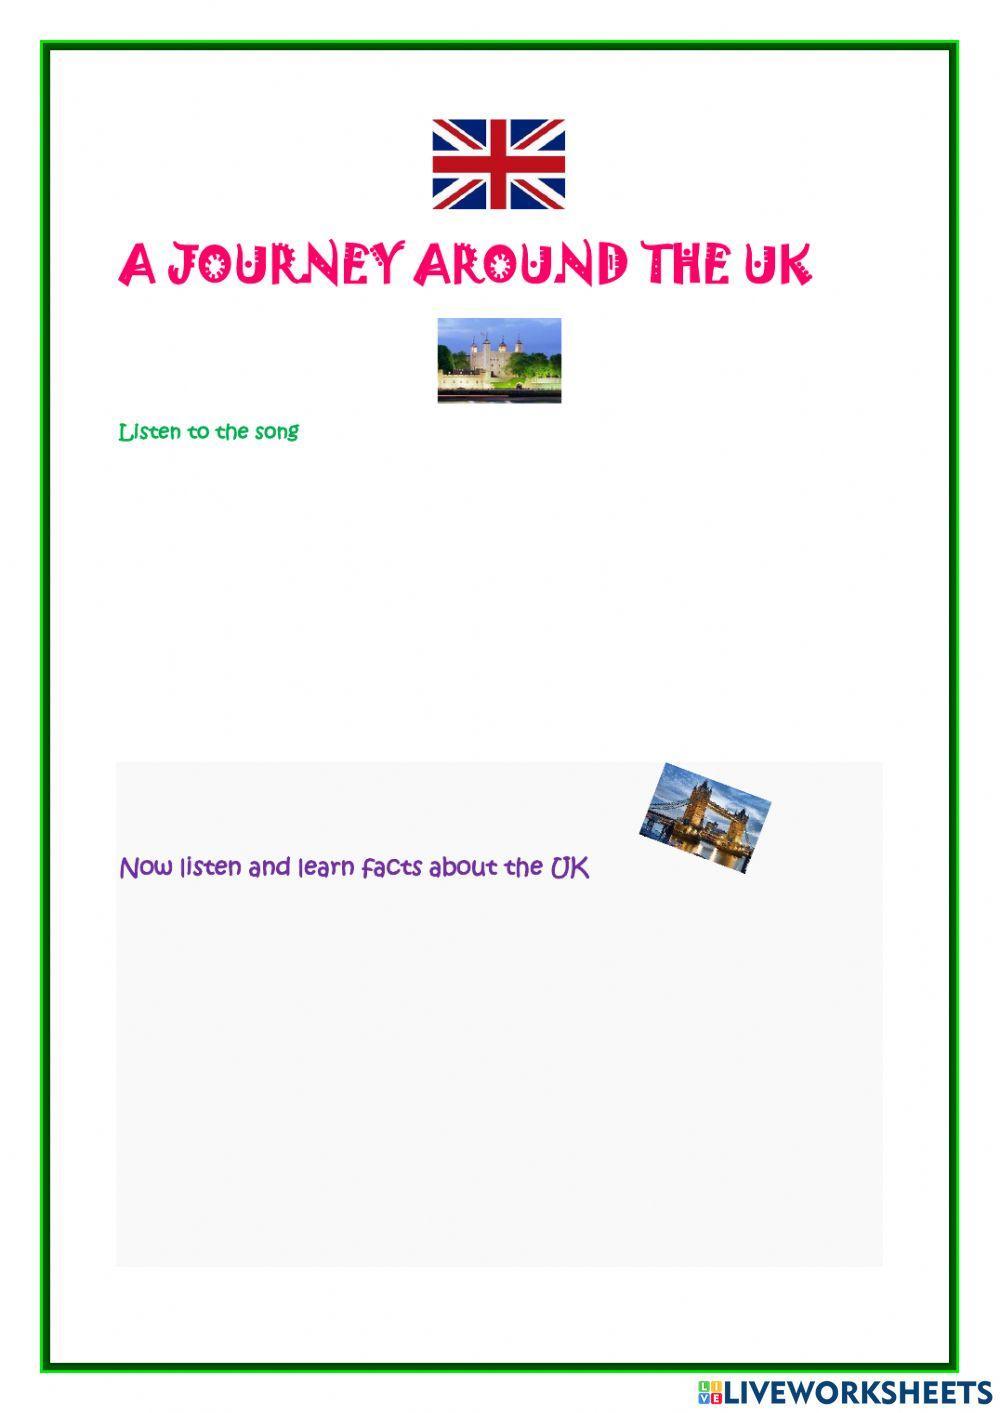 A journey around the UK